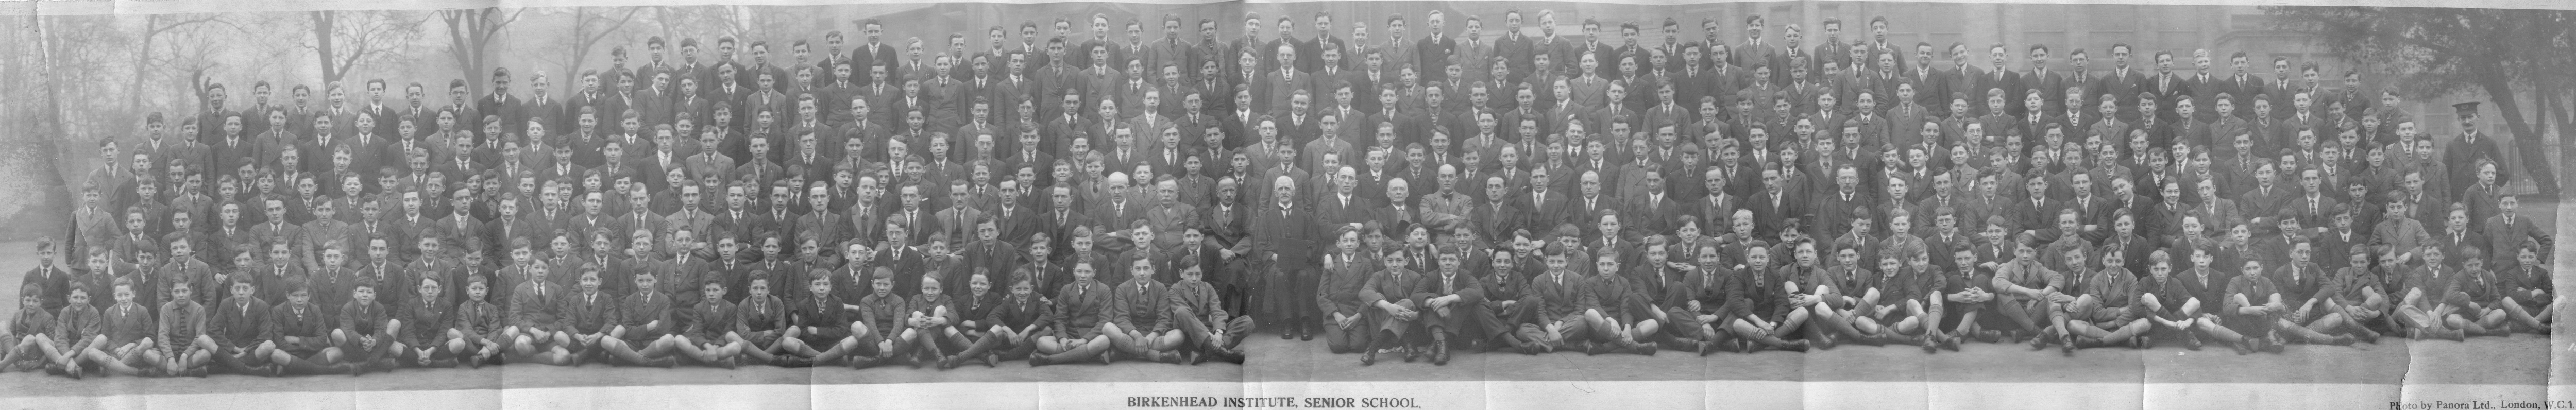 Whole School Photograph - 1929